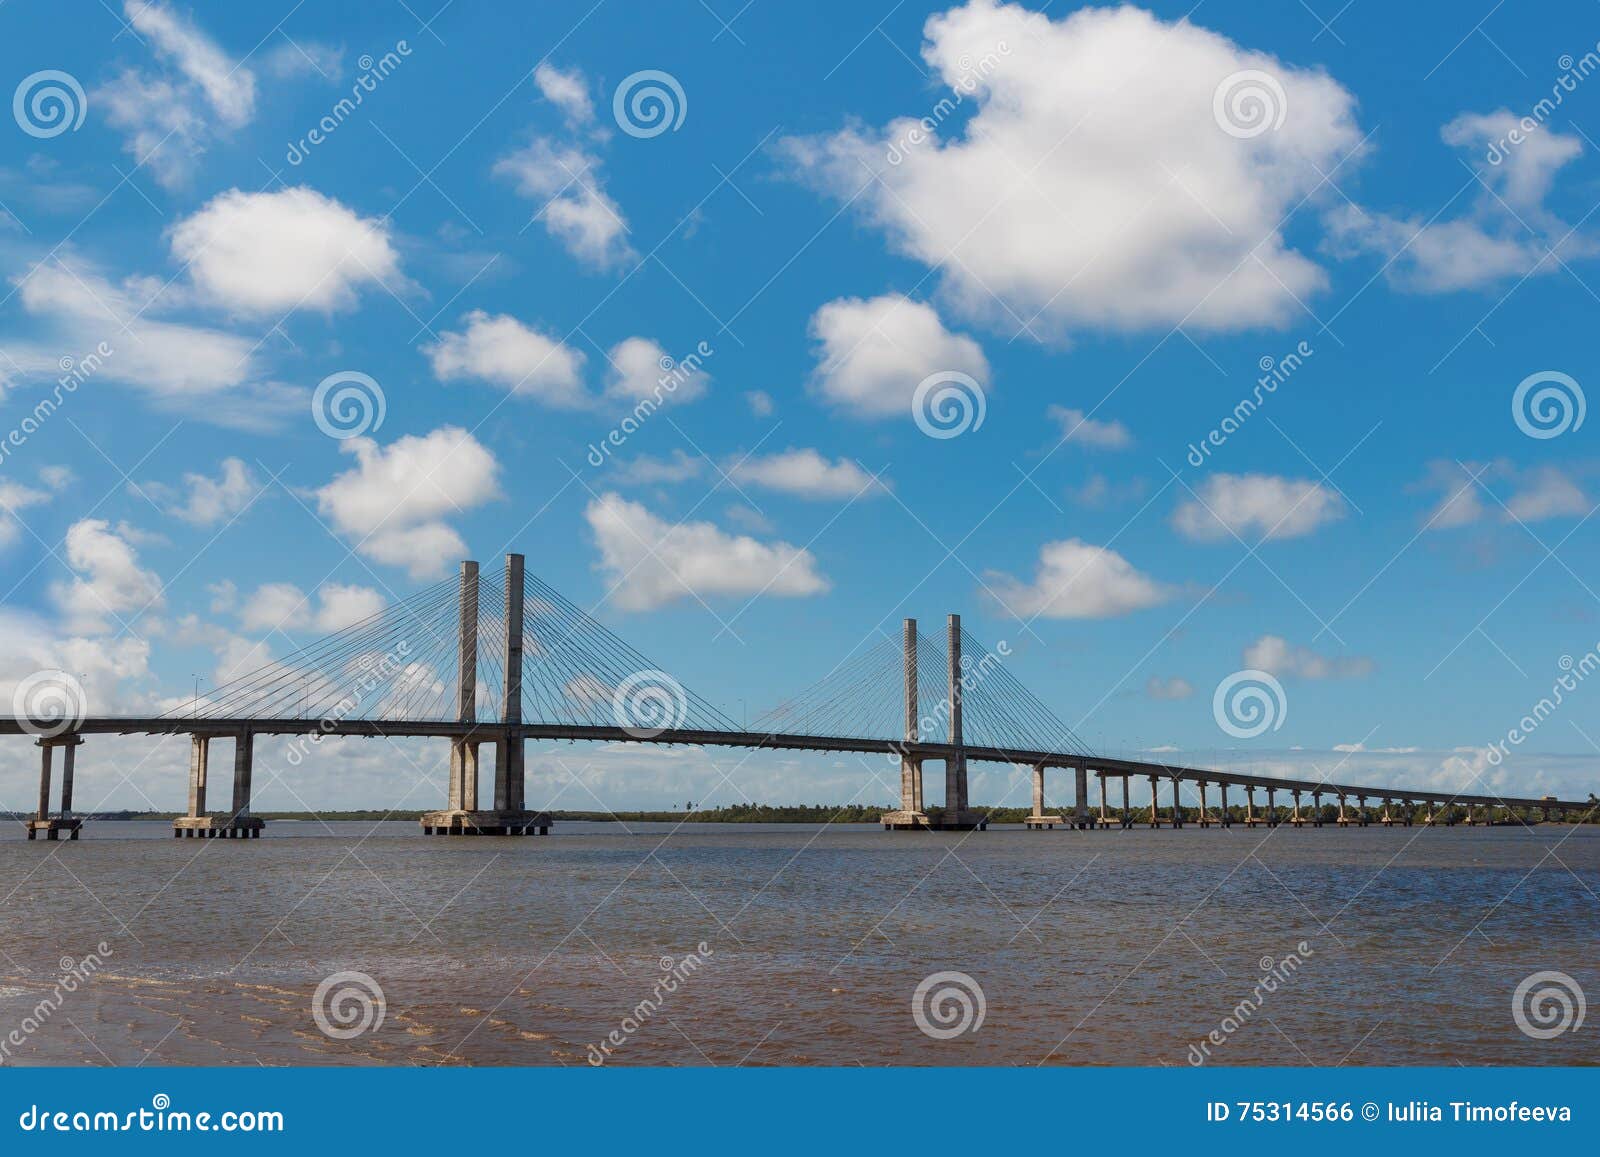 bridge ponte construtor joao alves in aracaju, sergipe, brazil